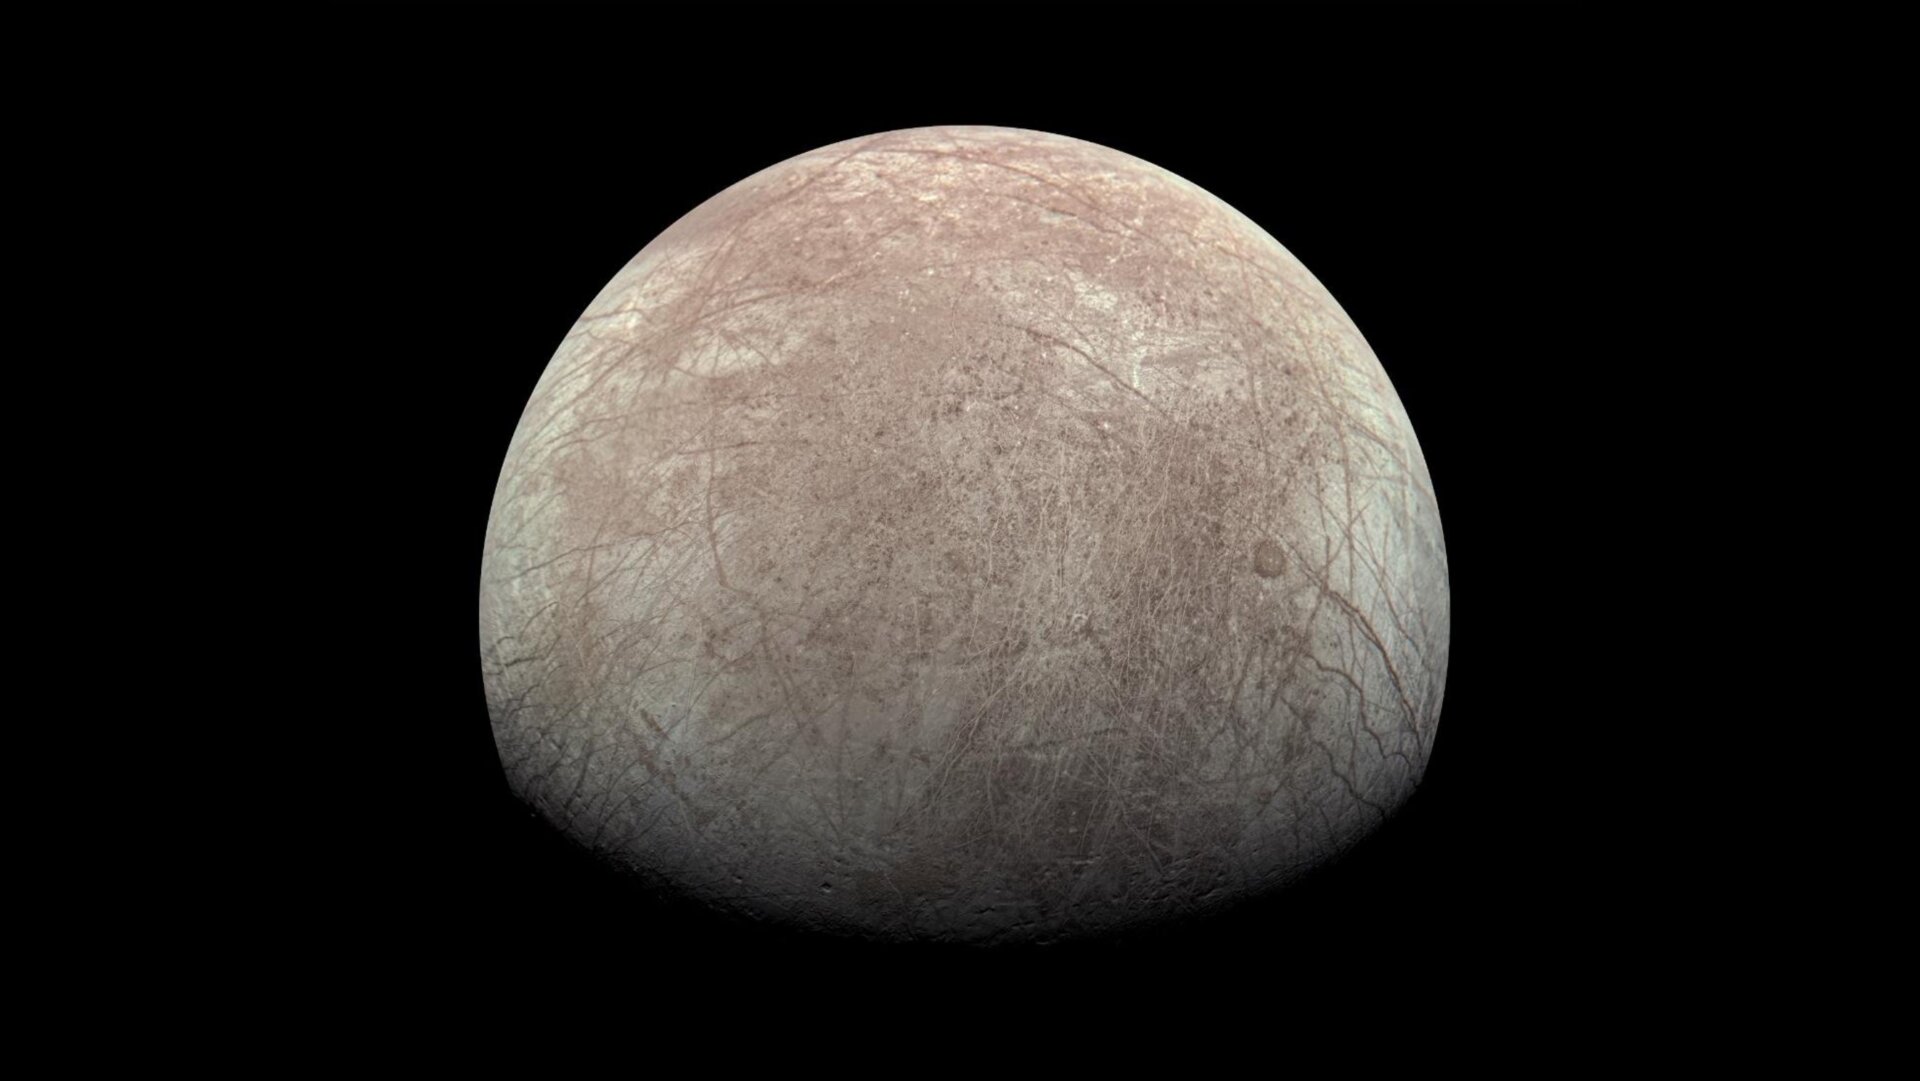 Image: Image data: NASA/JPL-Caltech/SwRI/MSSS Image processing: Kevin M. Gill